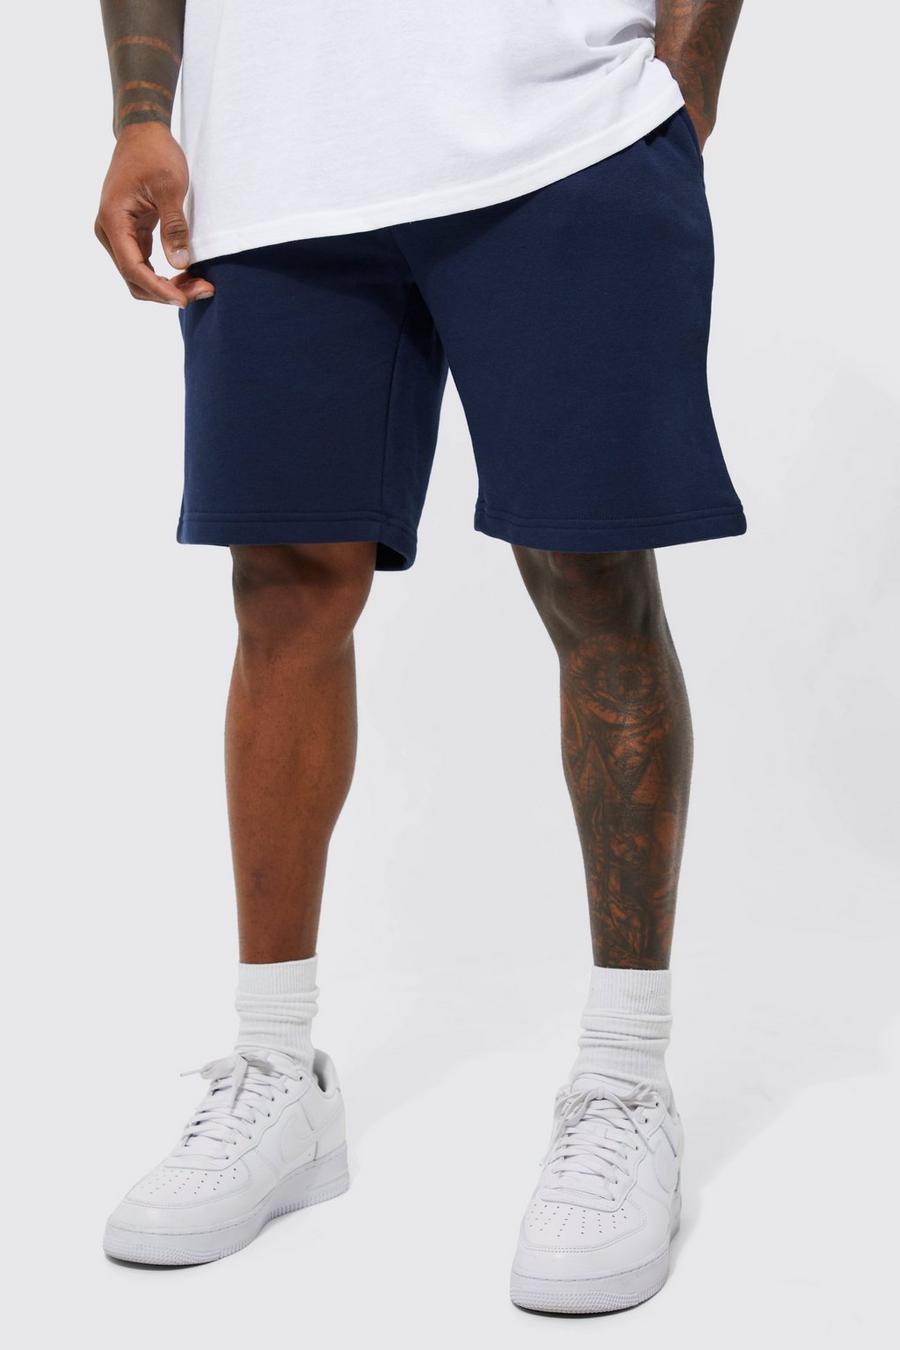 Pantalón corto básico holgado de tela jersey, Navy